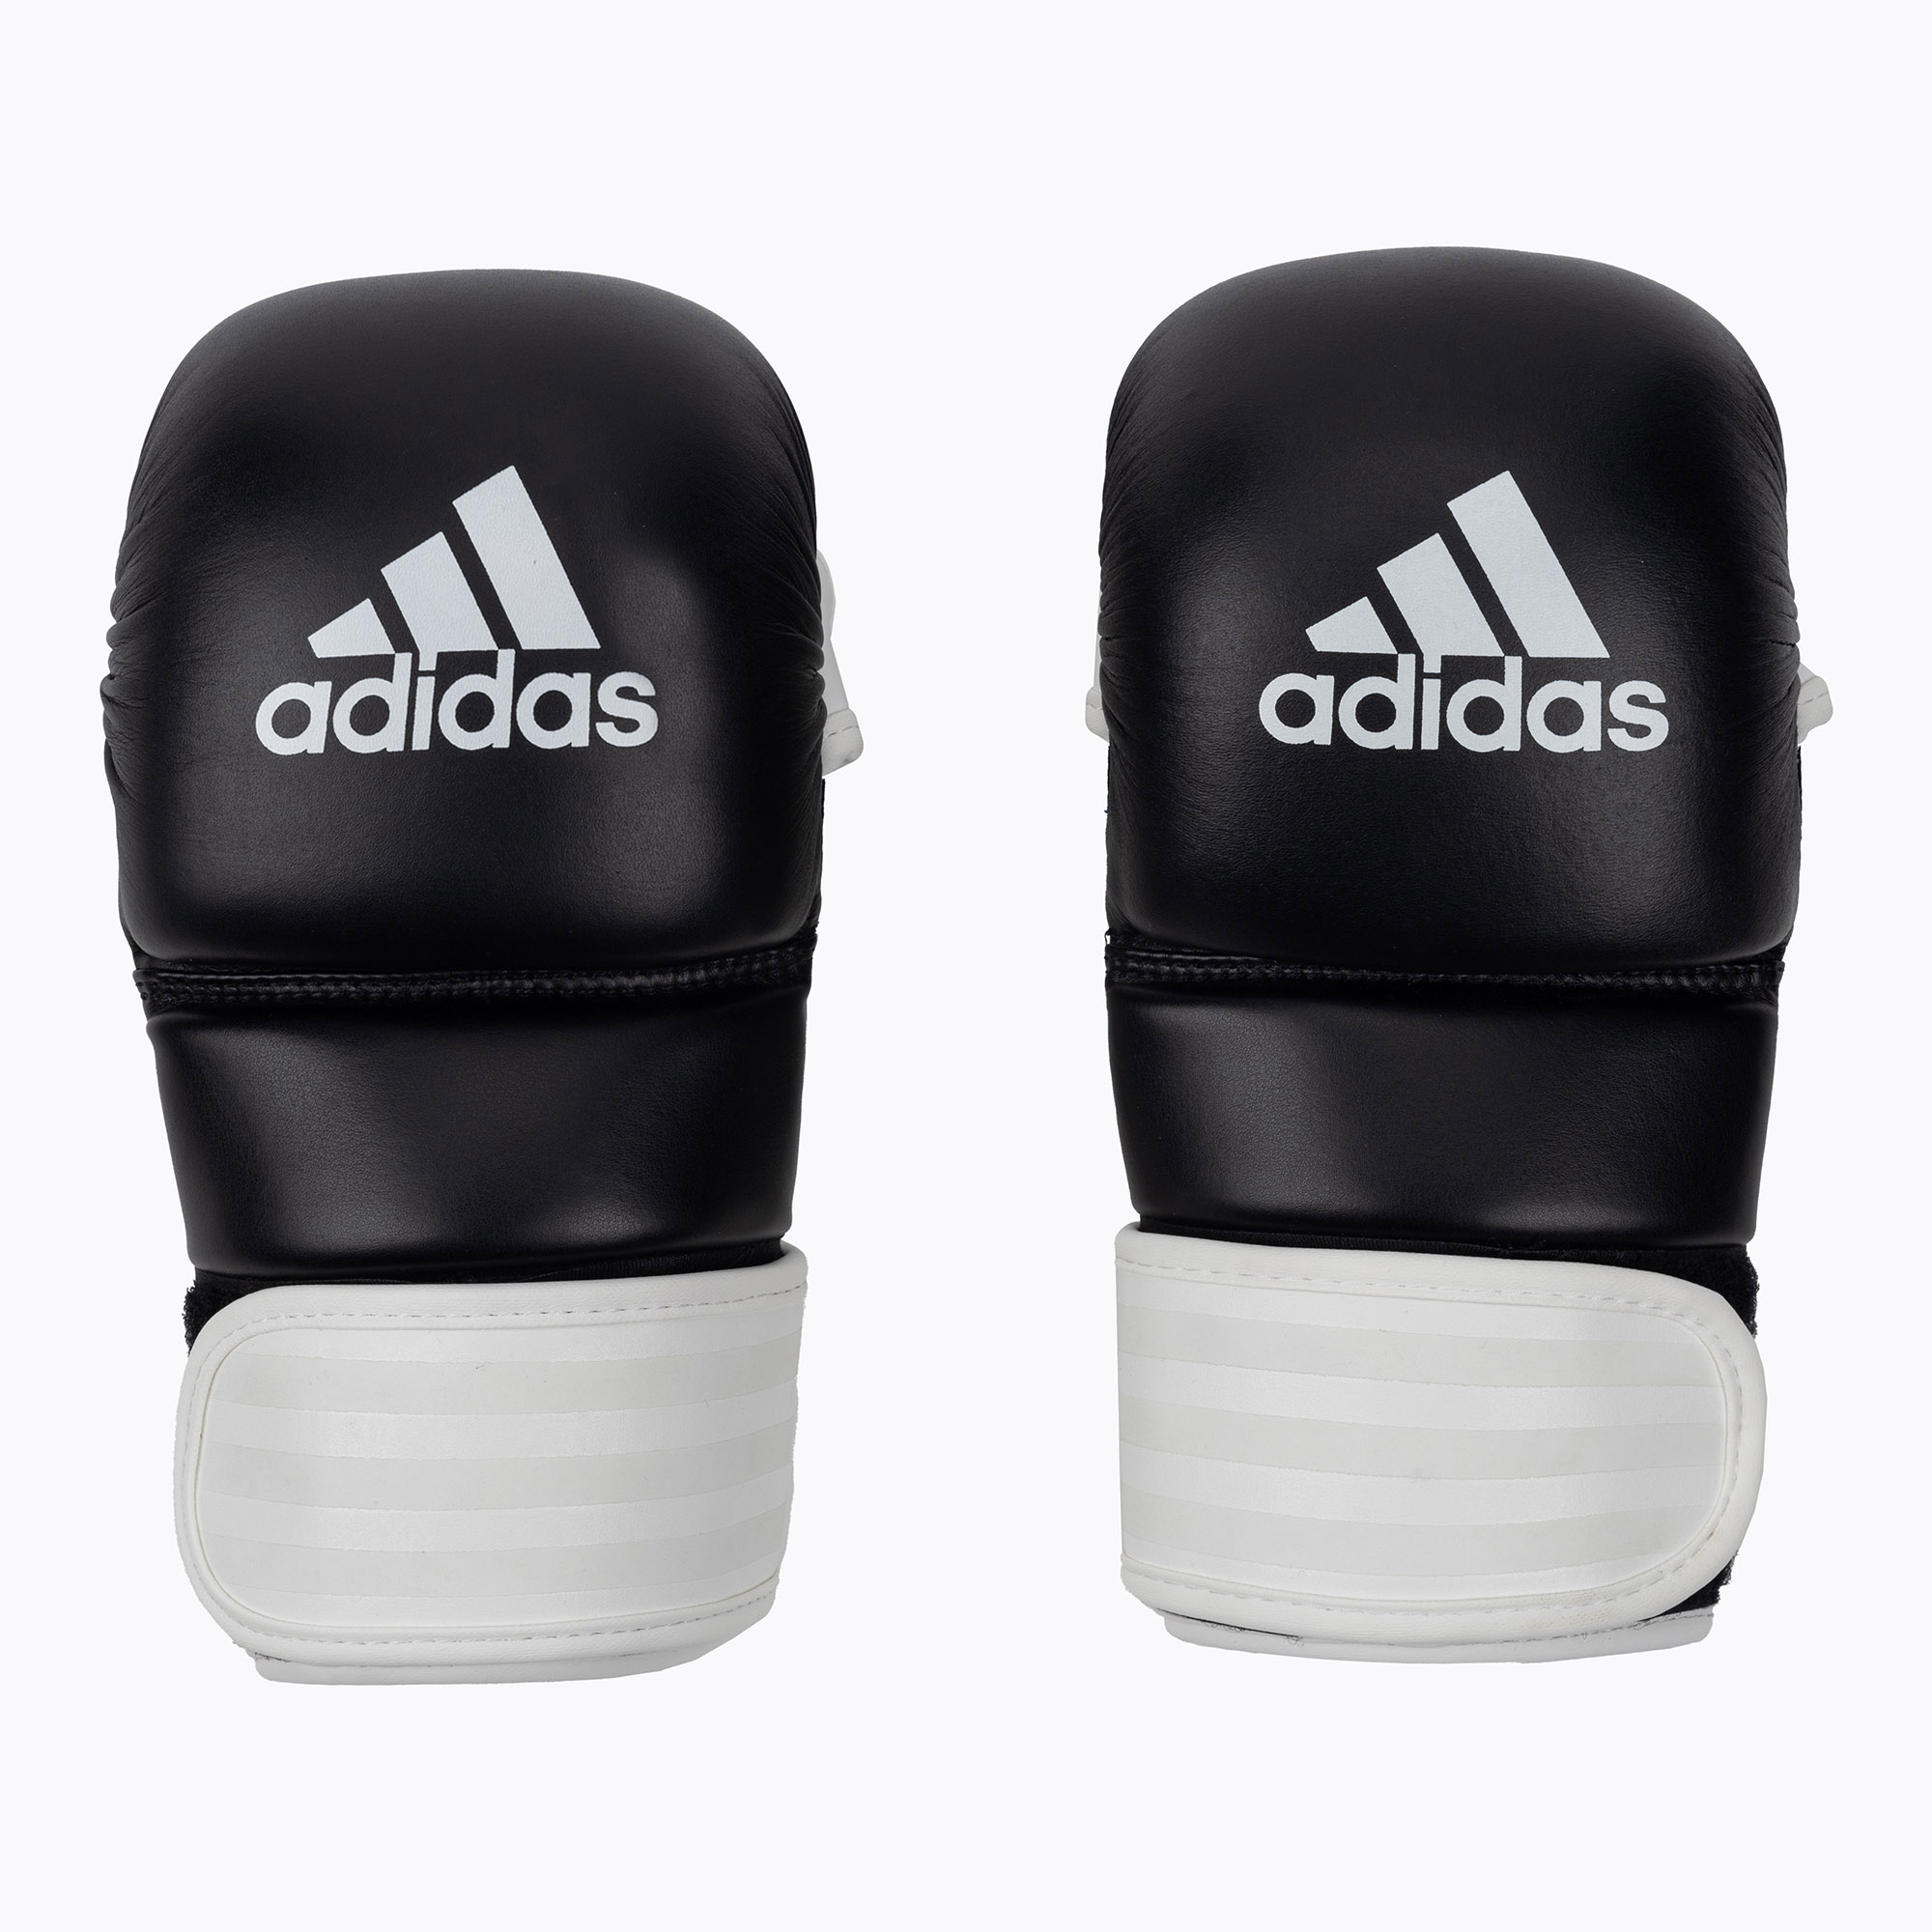 Adidas grapplingové rukavice biele ADICSG061